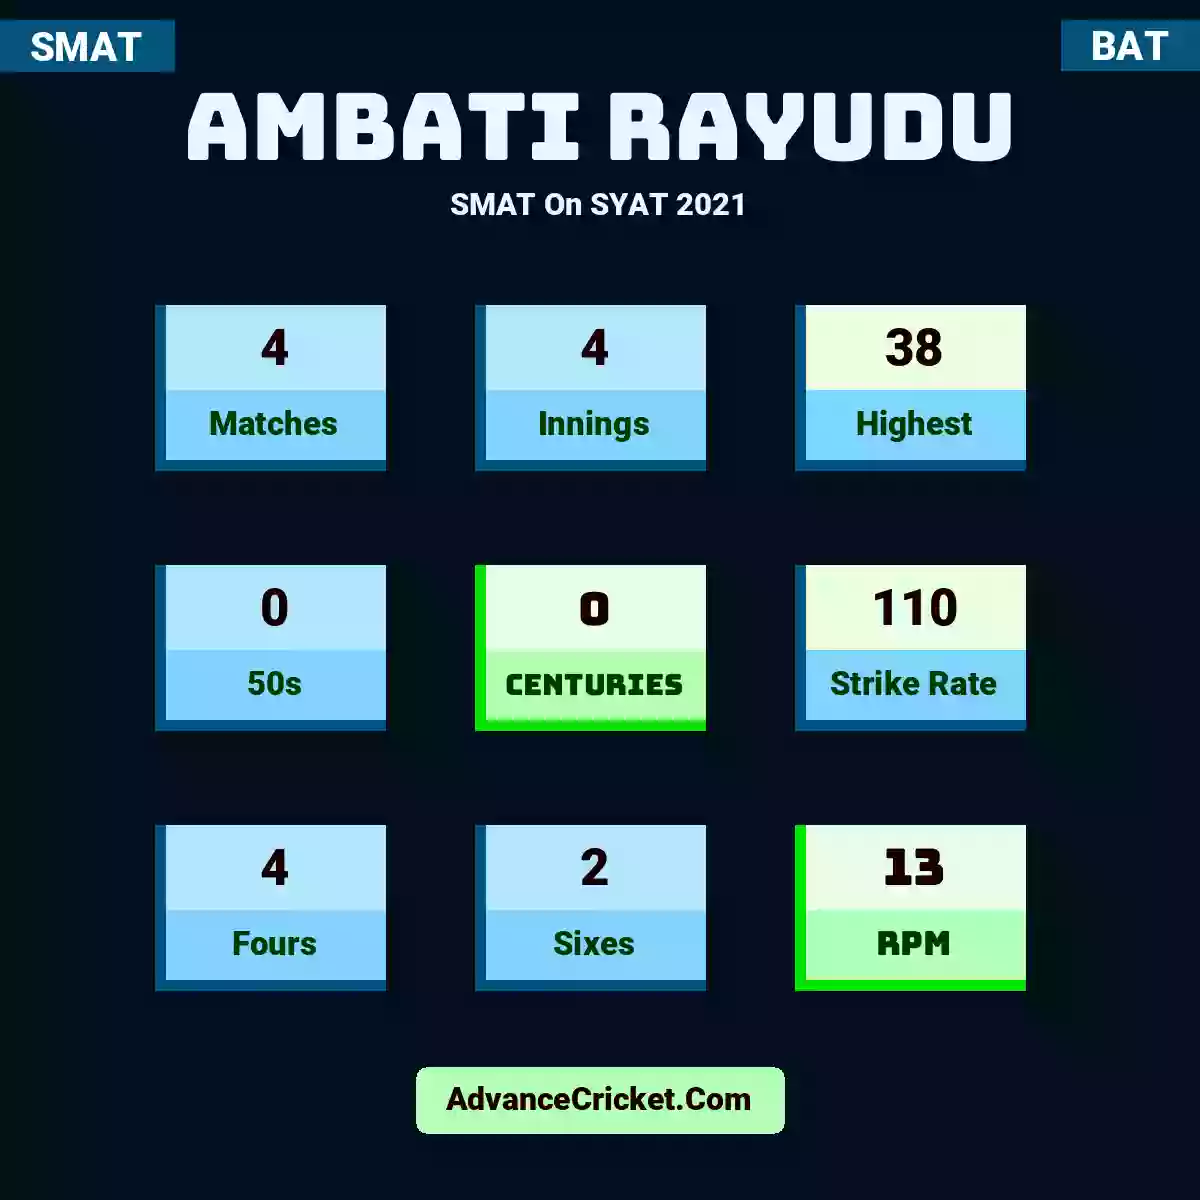 Ambati Rayudu SMAT  On SYAT 2021, Ambati Rayudu played 4 matches, scored 38 runs as highest, 0 half-centuries, and 0 centuries, with a strike rate of 110. A.Rayudu hit 4 fours and 2 sixes, with an RPM of 13.